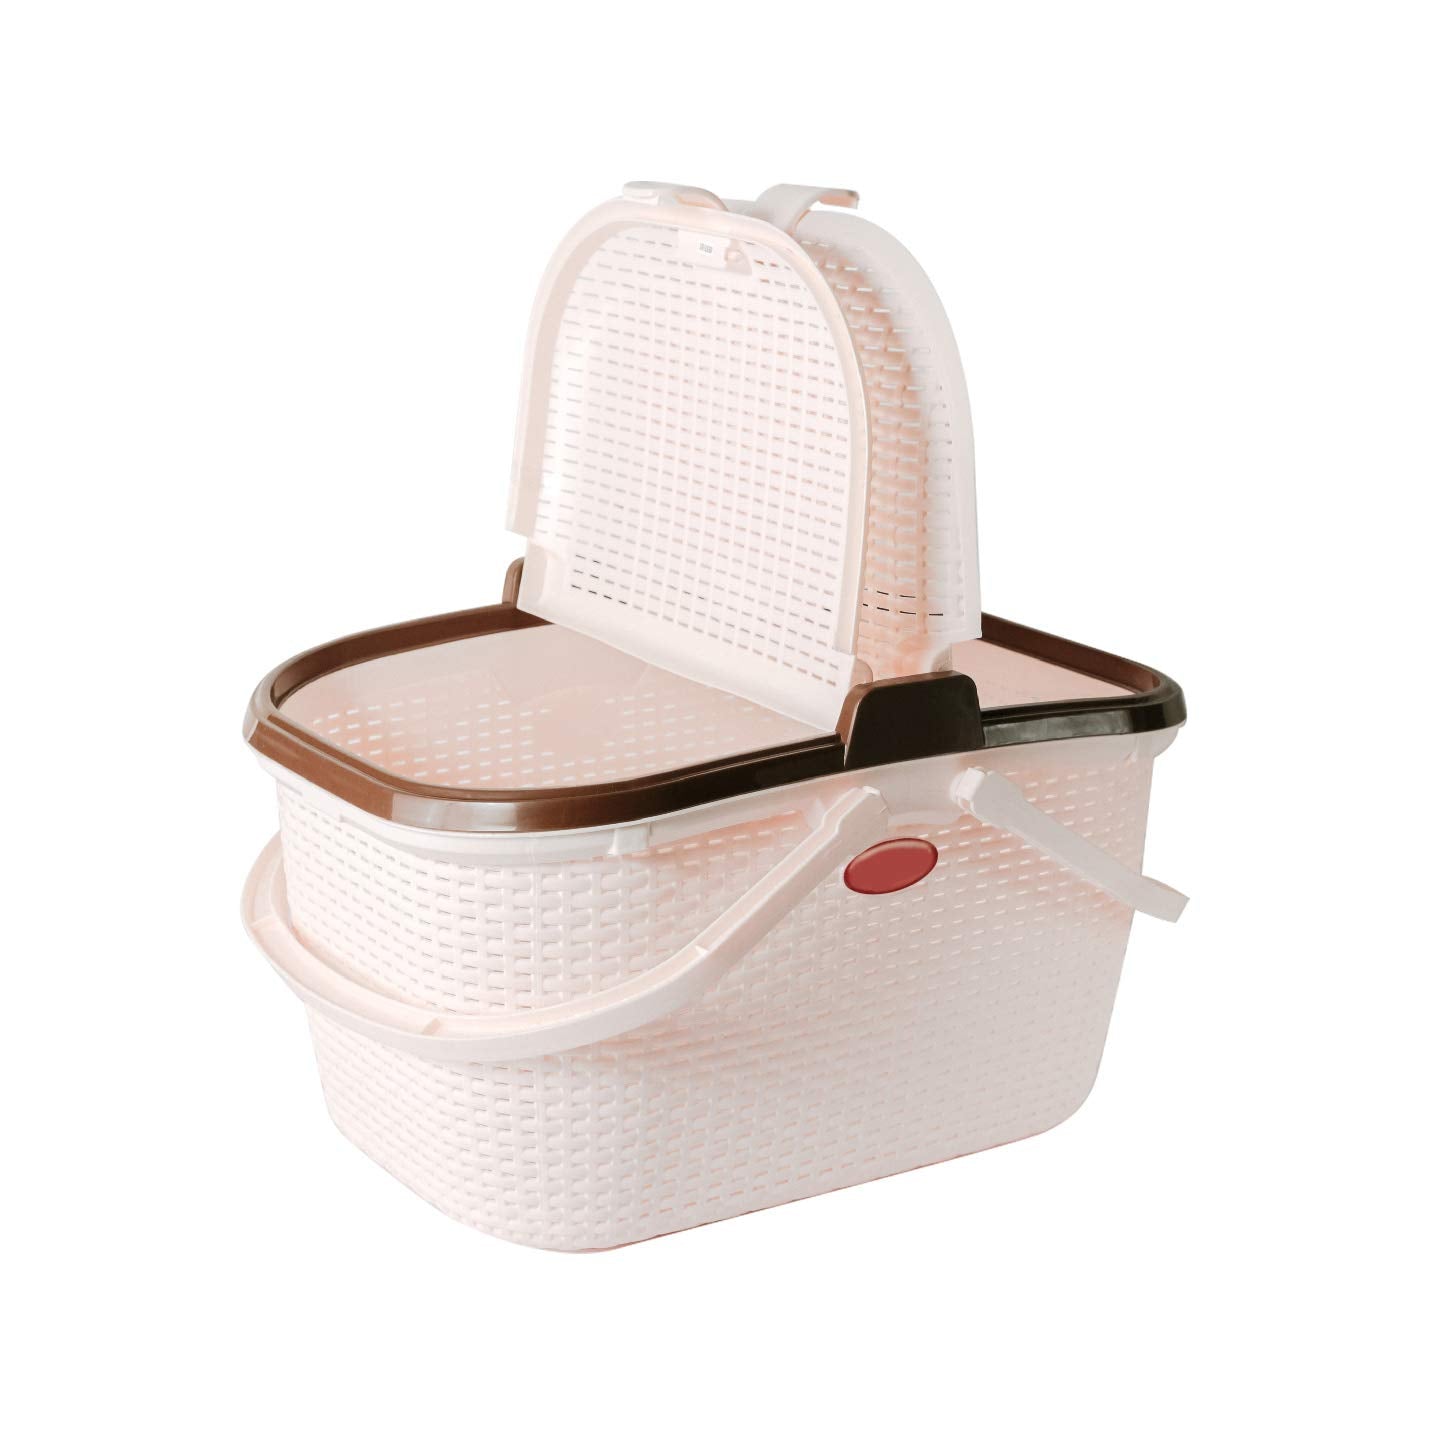 GALOOF Multi Utility Picnic Basket/Cloth Storage/Shopping Basket/Toy Storage (29x33x47 cm) (BEIGE)